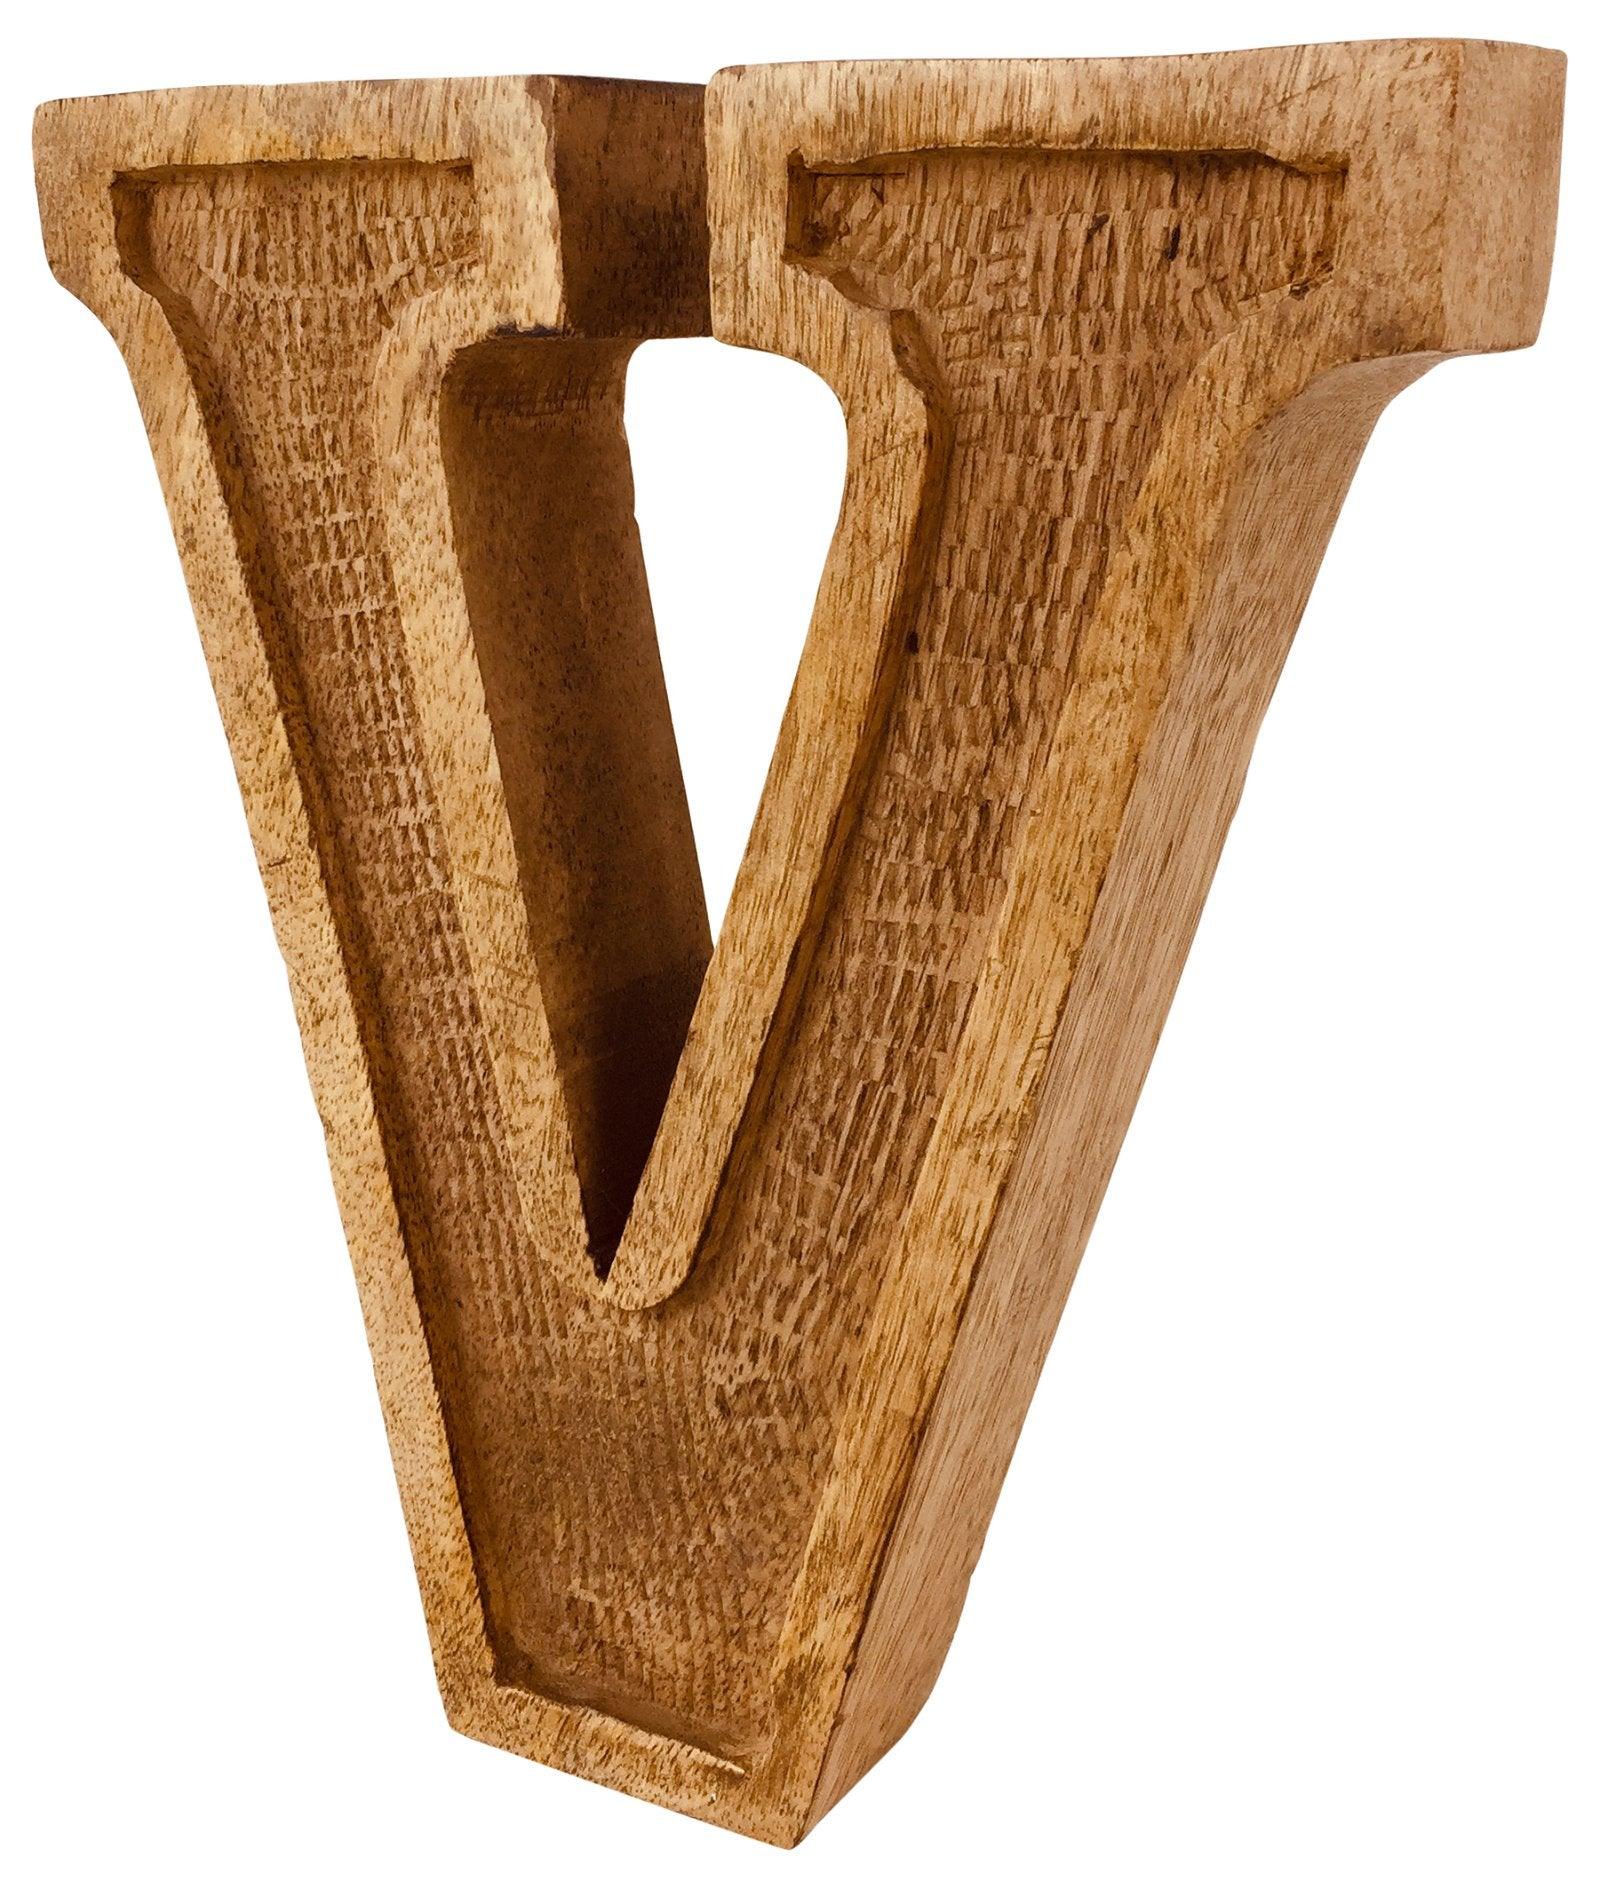 View Hand Carved Wooden Embossed Letter V information